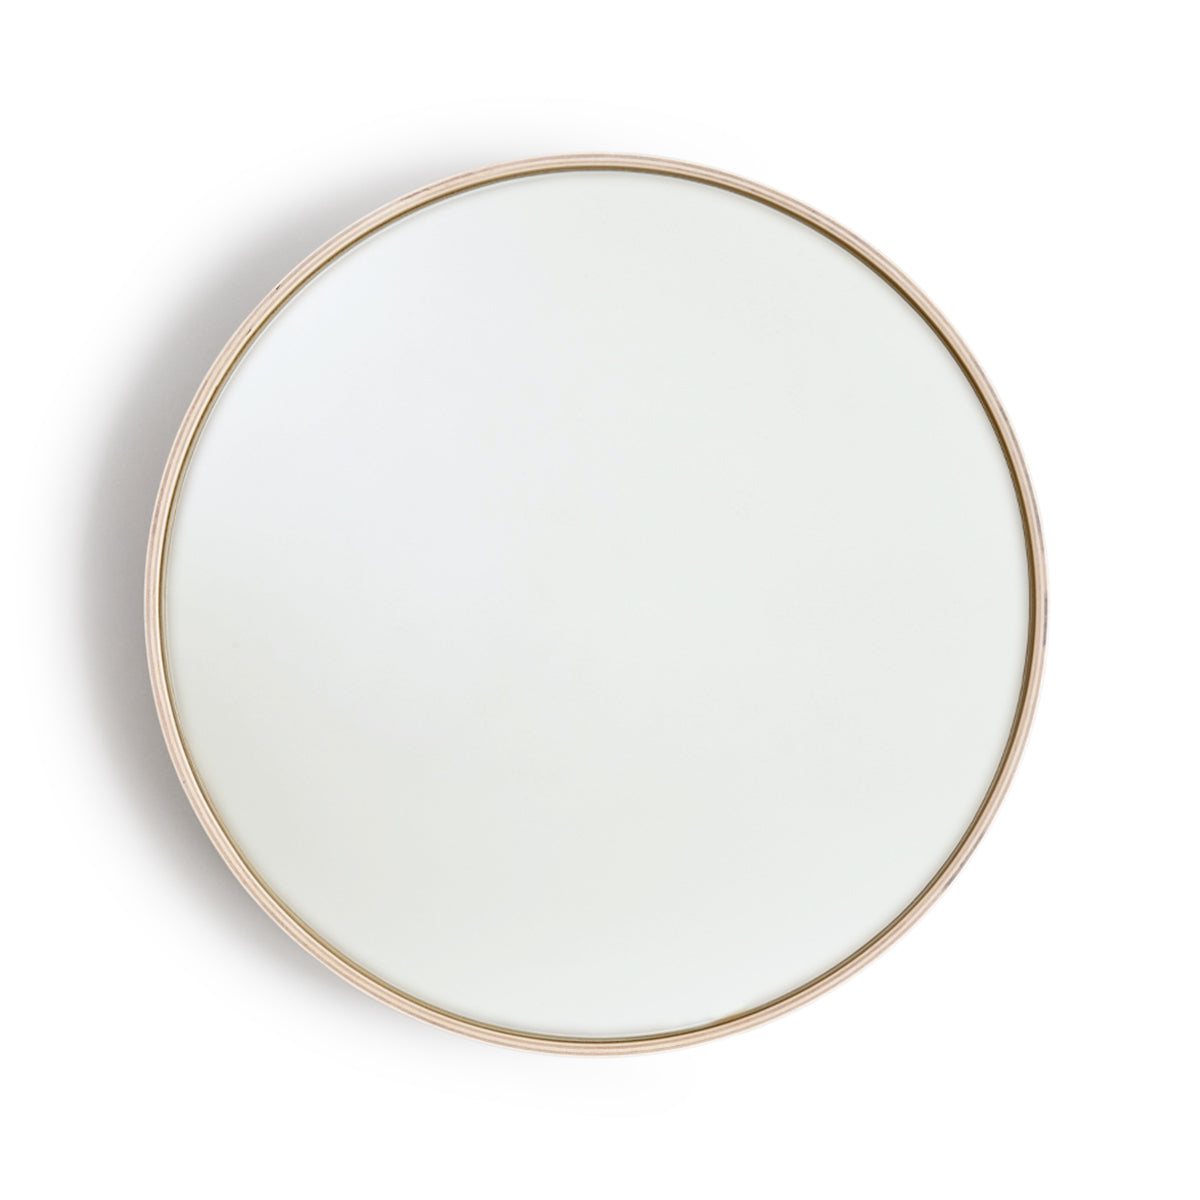 White Oak Wood Round Mirror by Saito Wood Co for Nalata Nalata silhouetted hanging against white